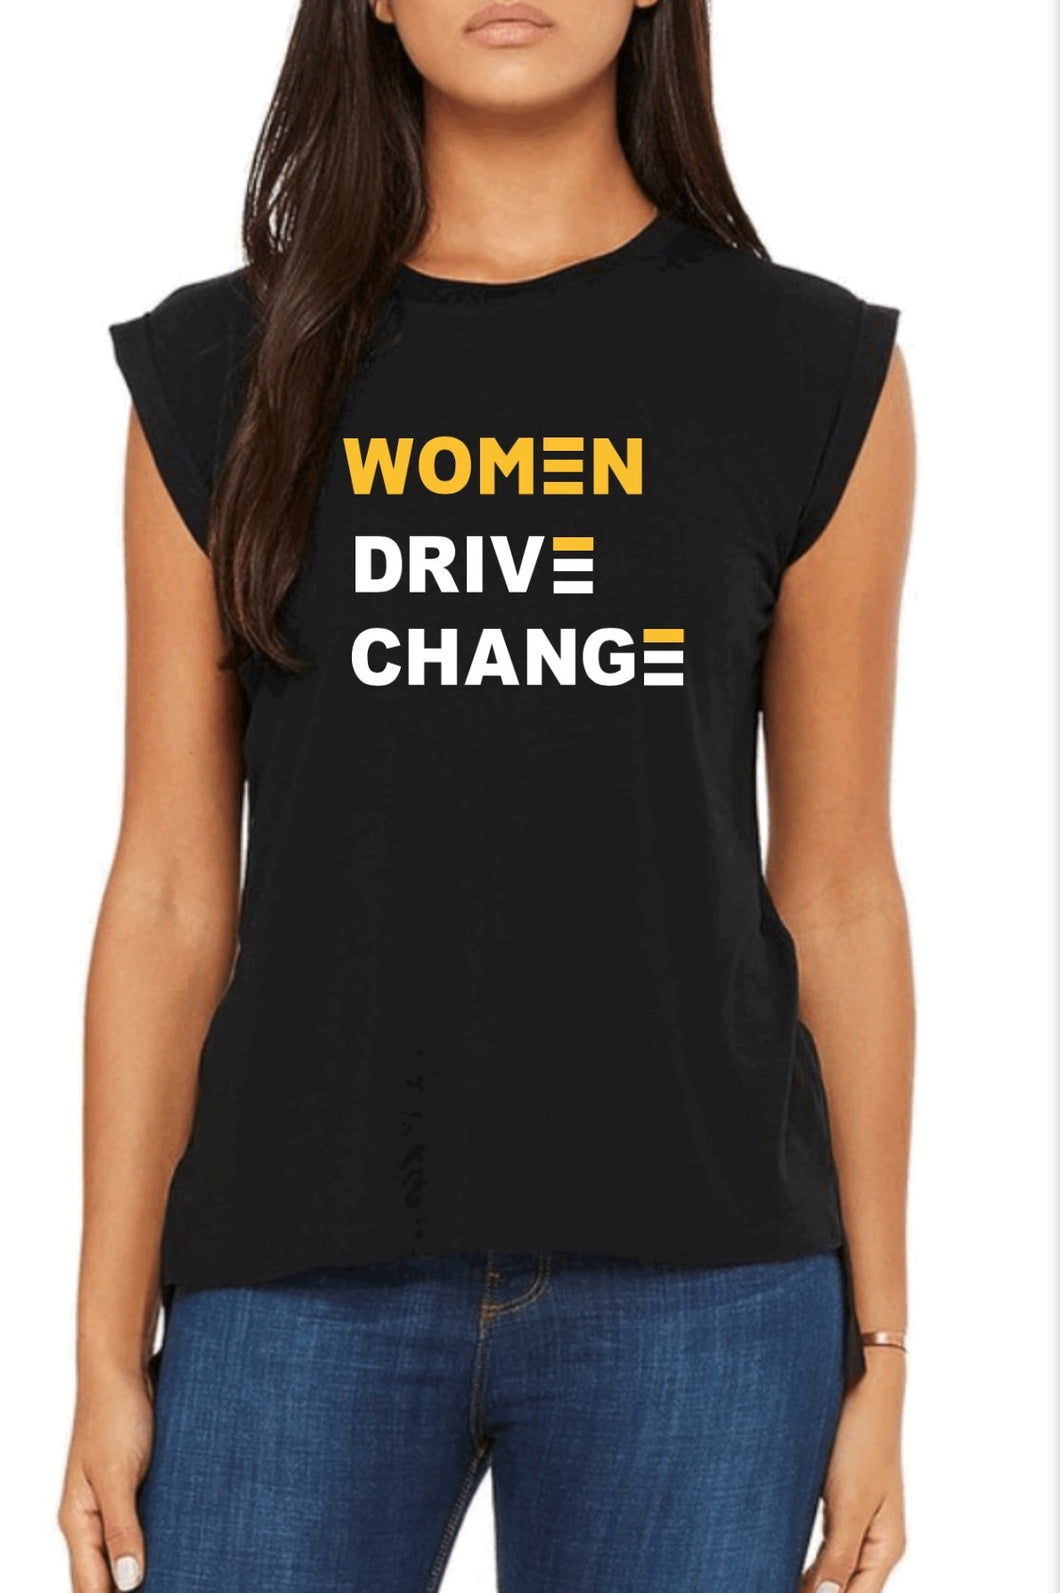 Women Drive Change - Black - Rolled Cuff - GOLD